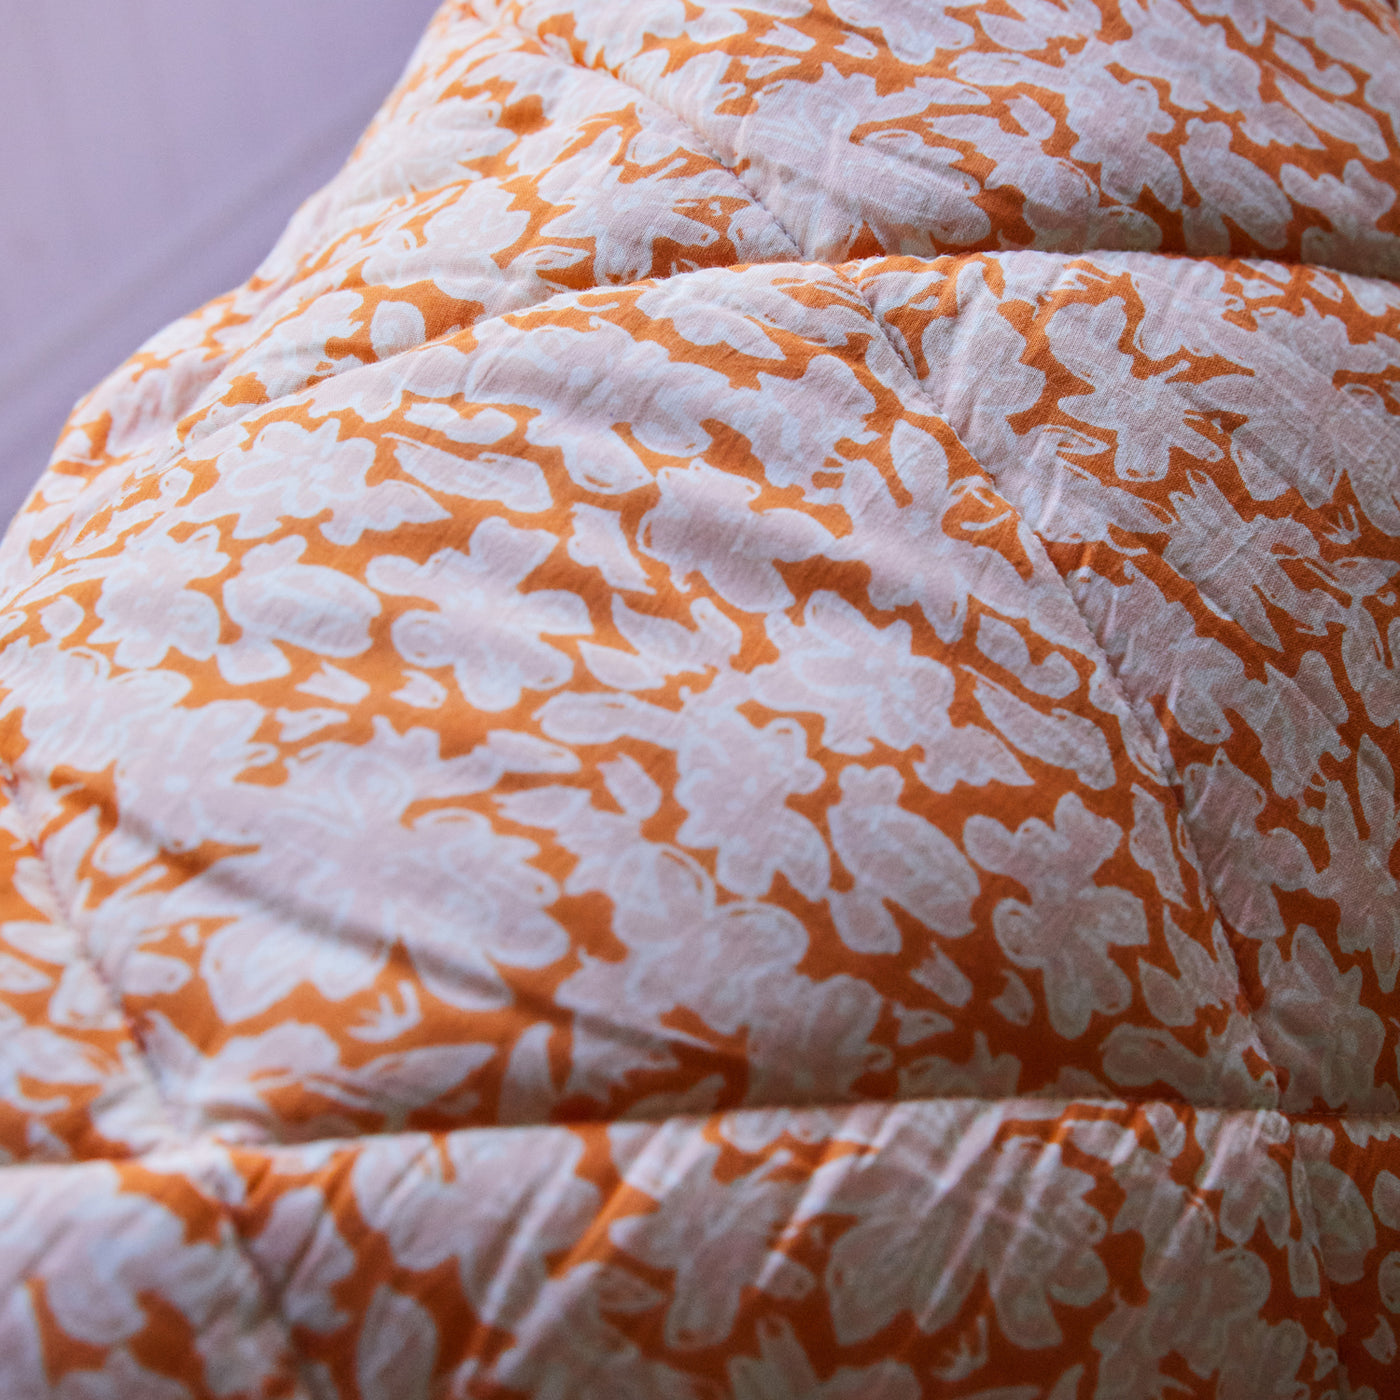 Bampton Pillow Sham Set - Persimmon Standard